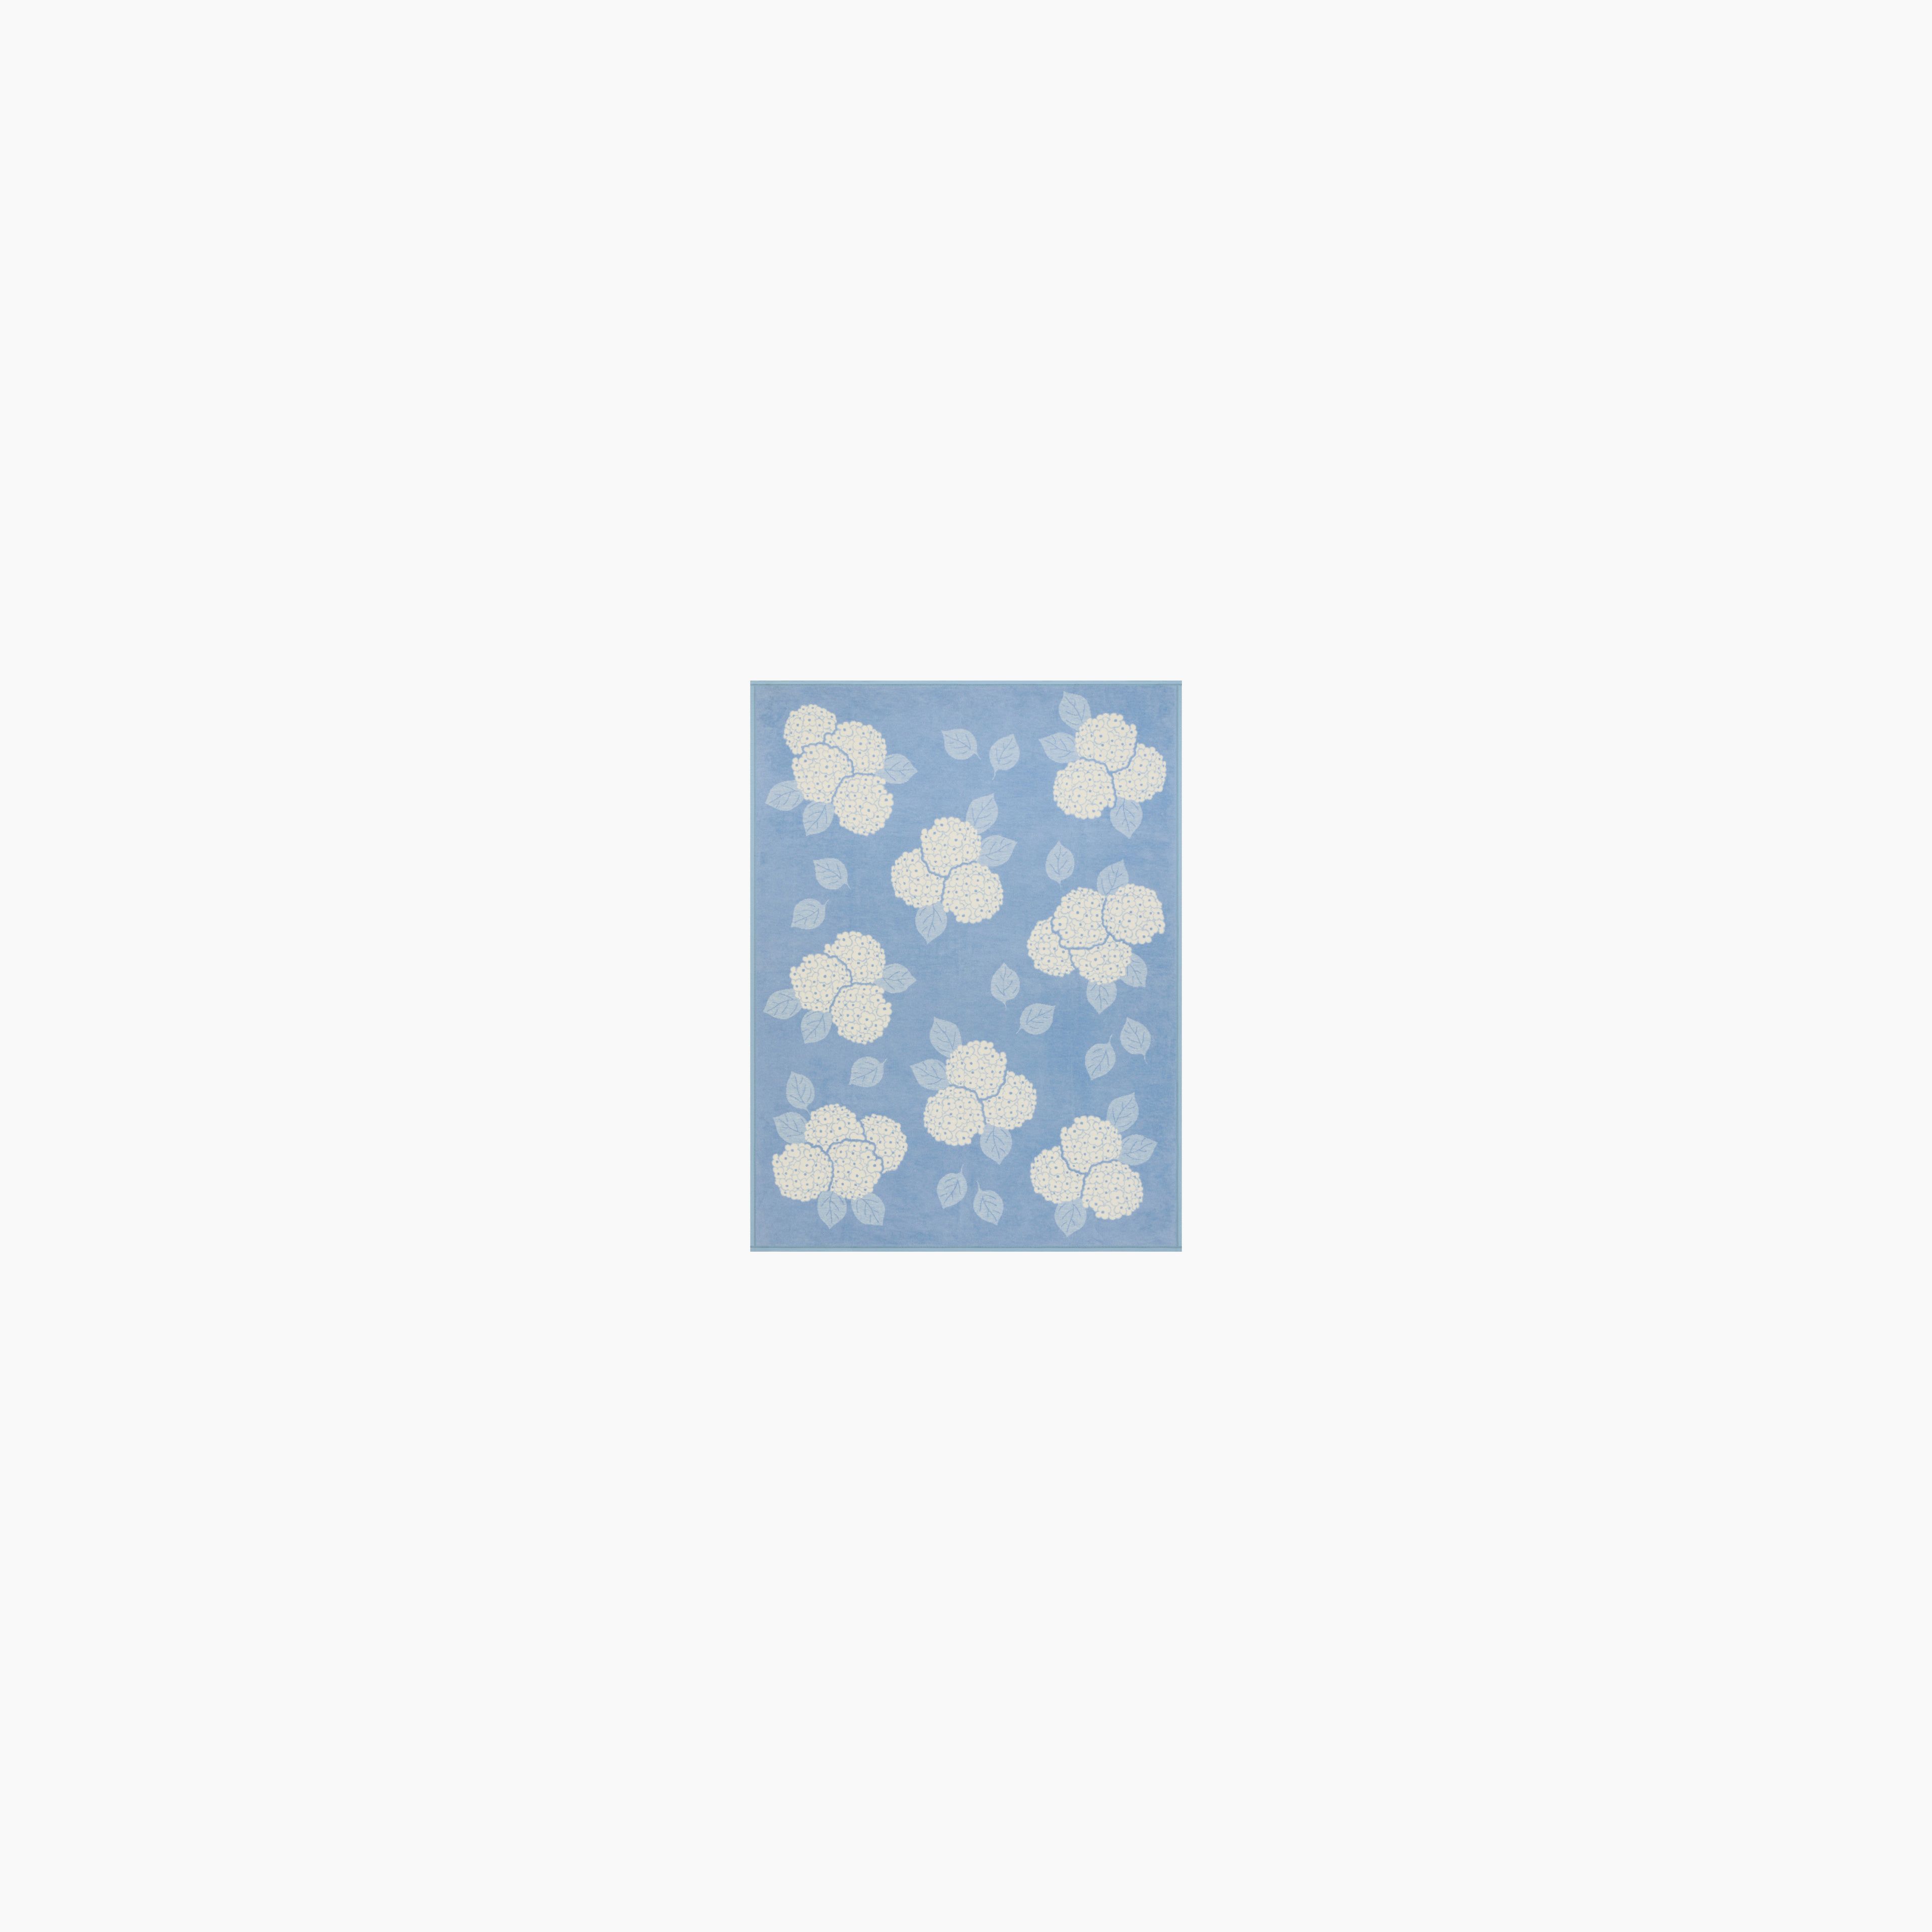 Hydrangeas Bluebell Blanket